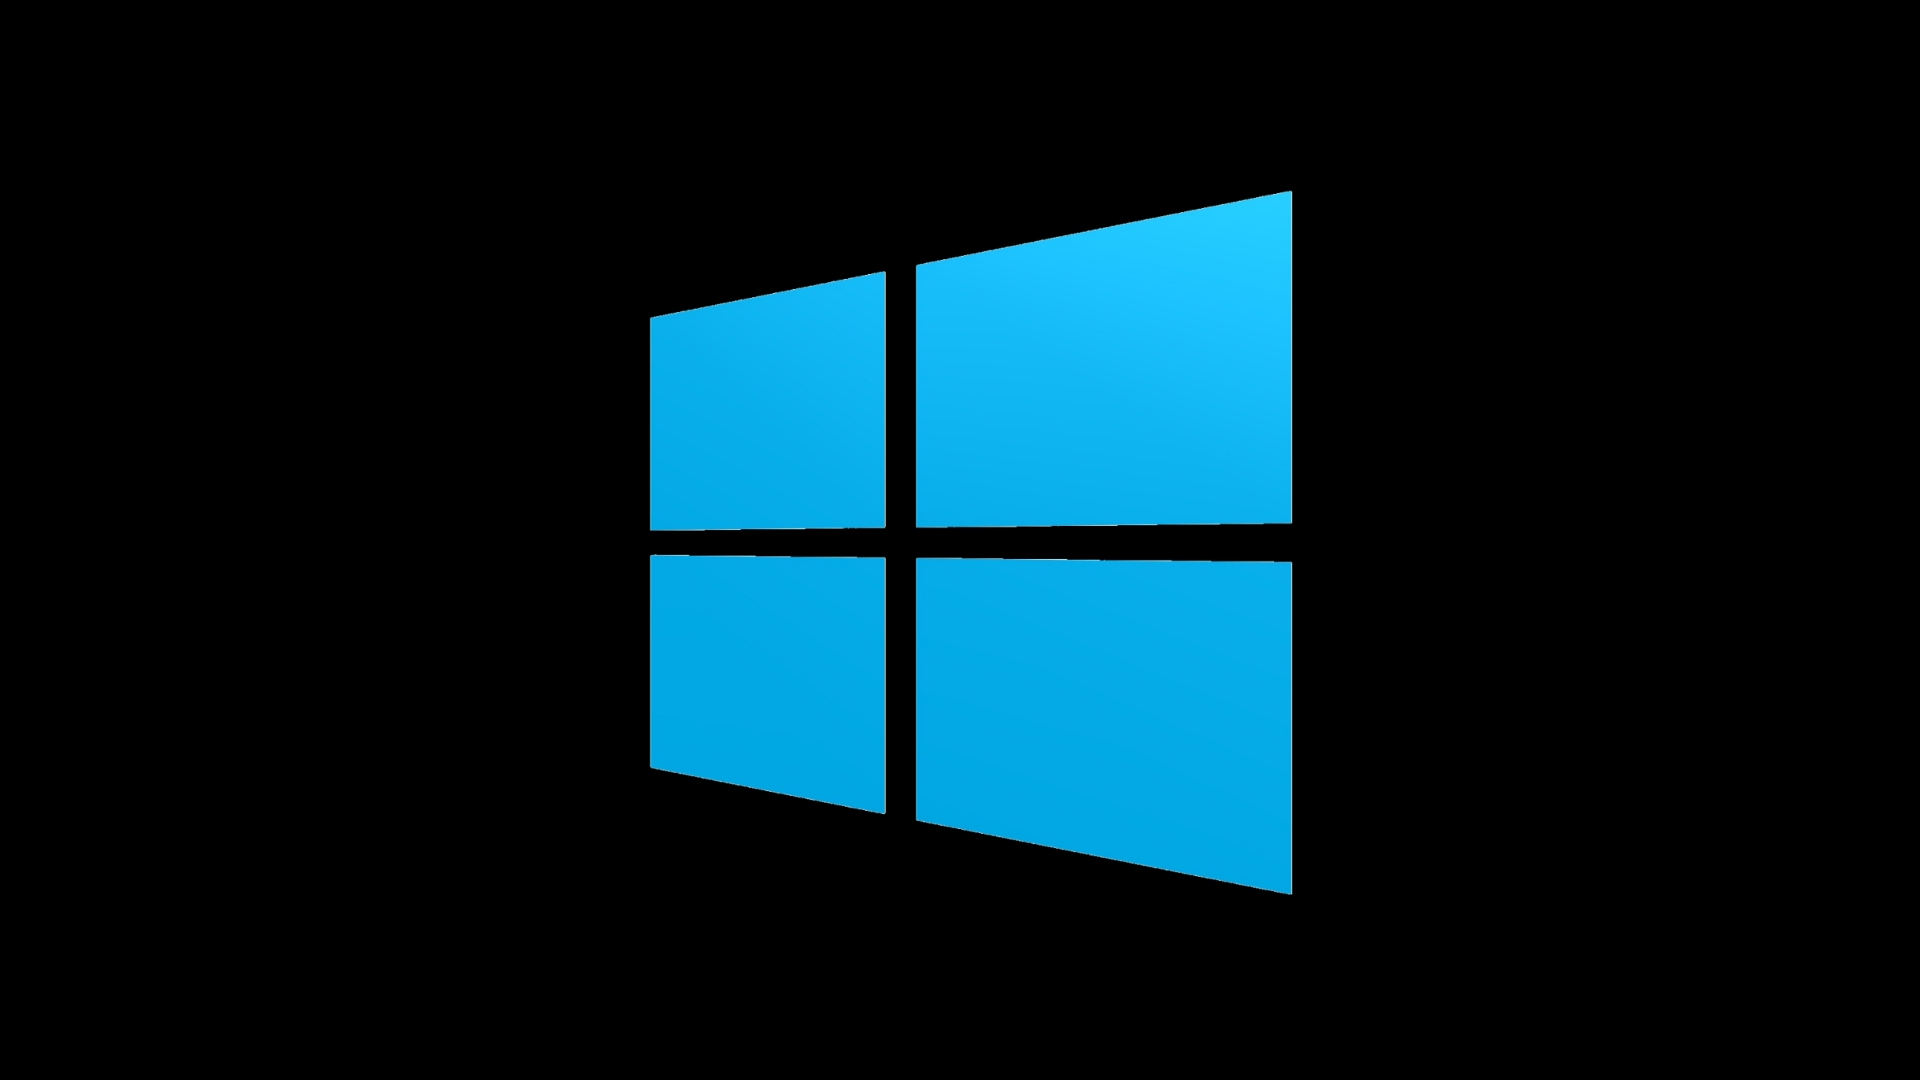 Windows 10 Logo Wallpaperjpg